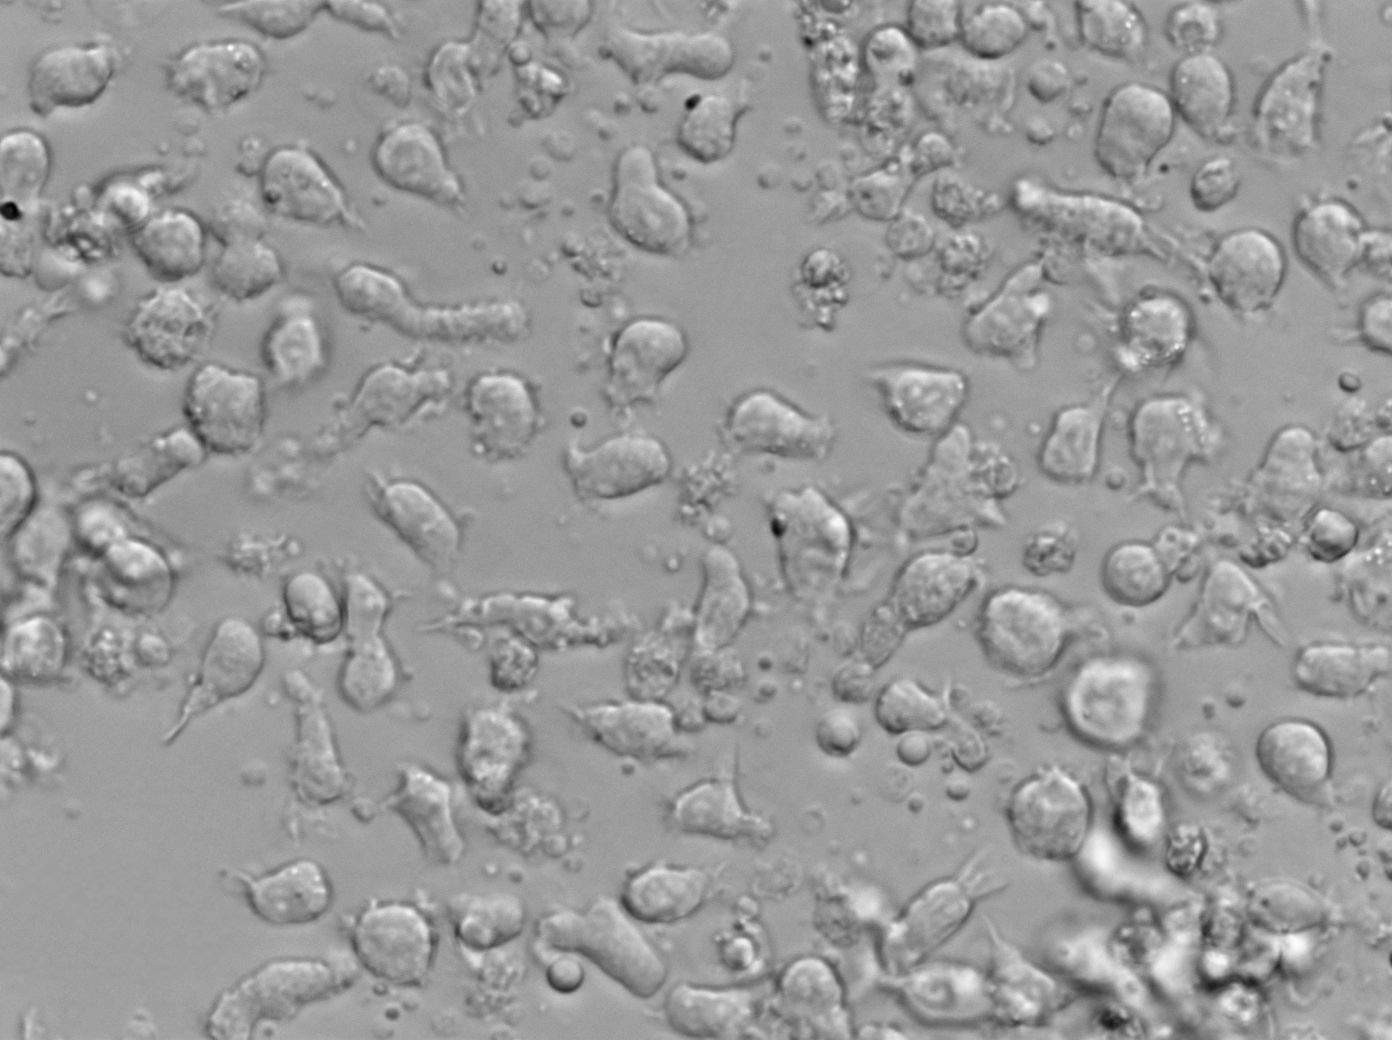 MT-4人急性淋巴母细胞白血病复苏细胞(附STR鉴定报告)